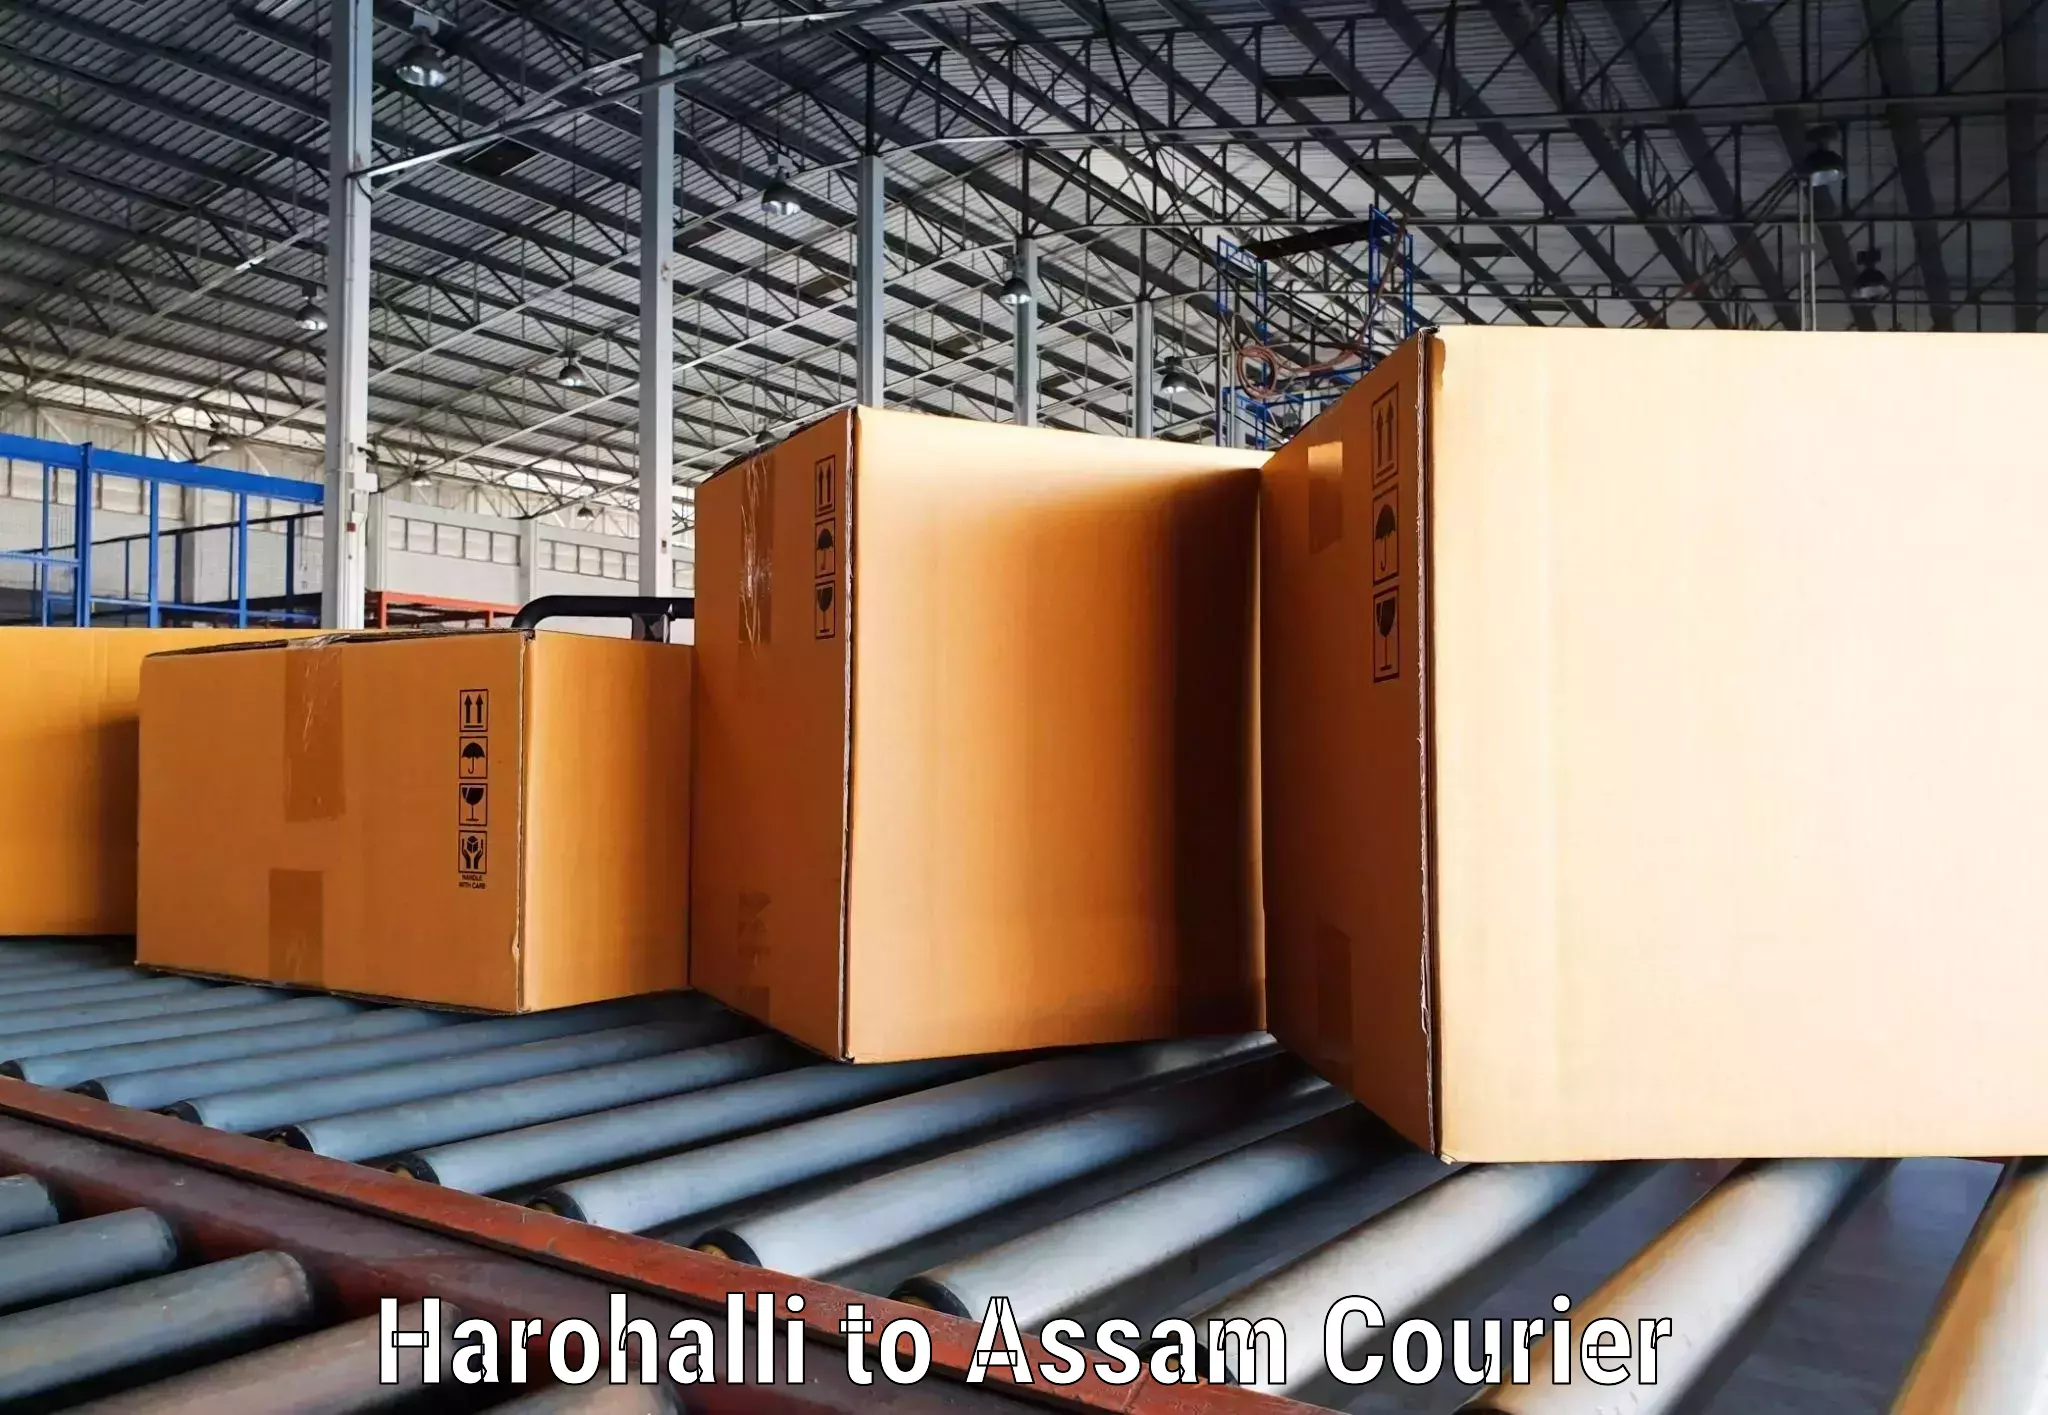 Courier service comparison Harohalli to Kampur